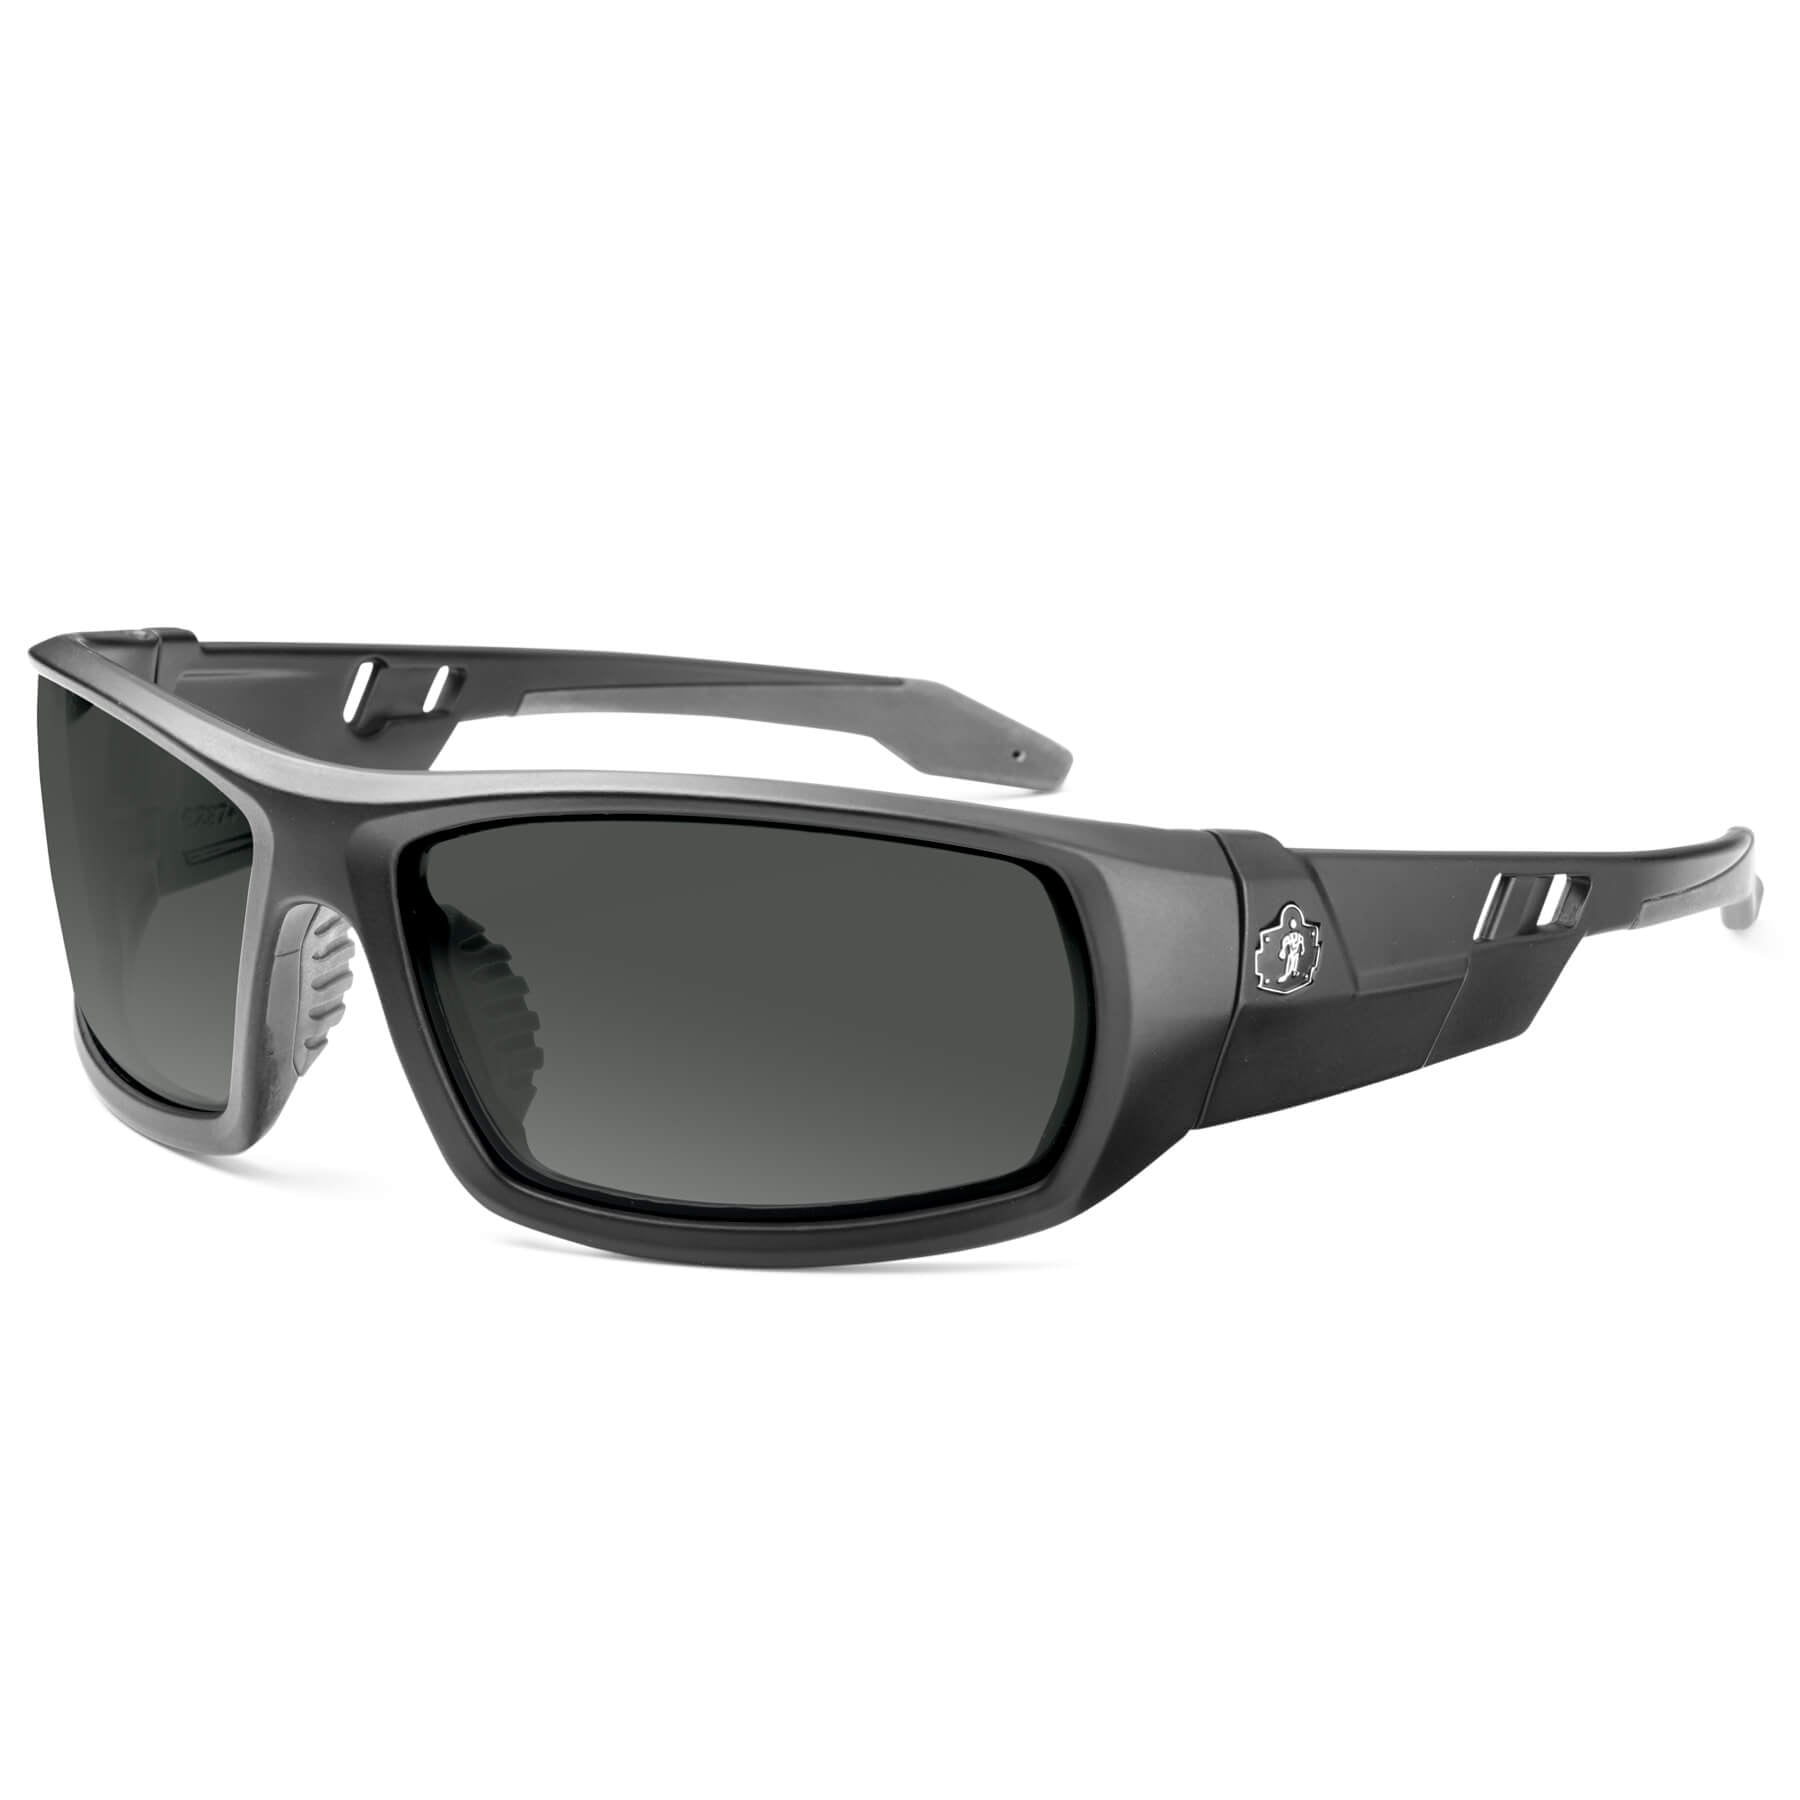 Skullerz® Odin Safety Sunglasses with Fog-Off